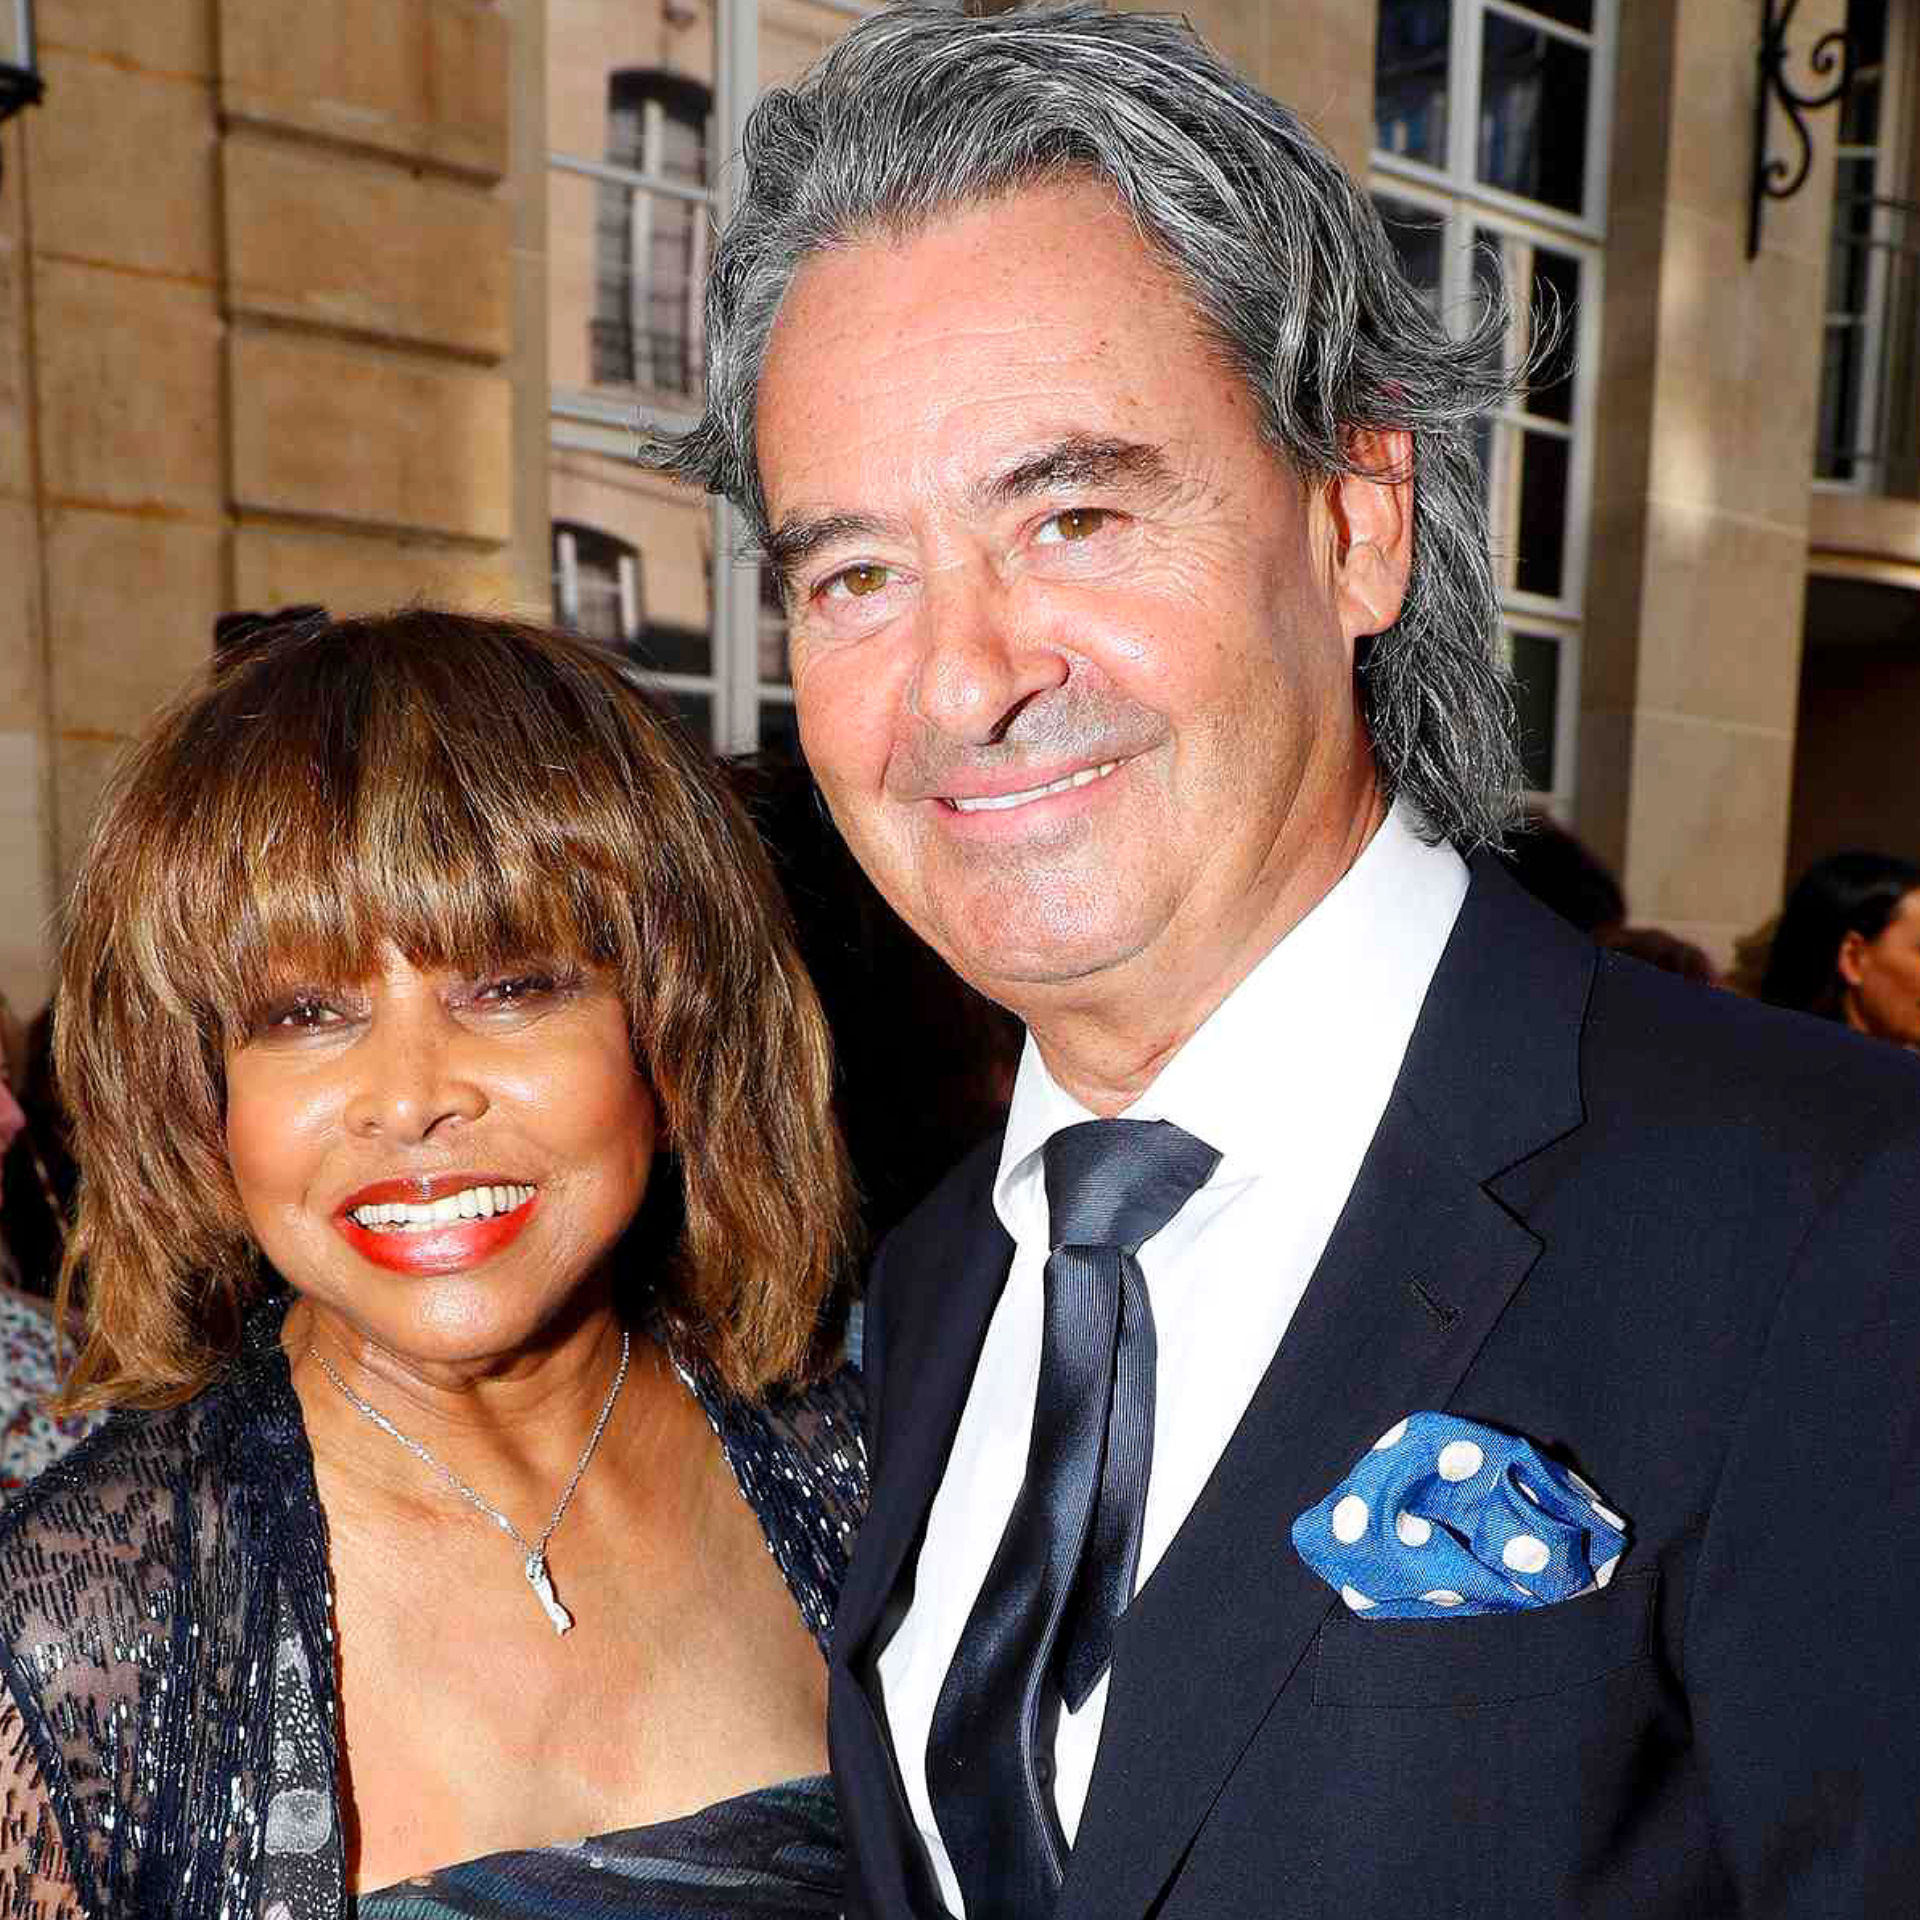 Singer Tina Turner husband set to inherit her fortune... Photo credit: @gettyimages